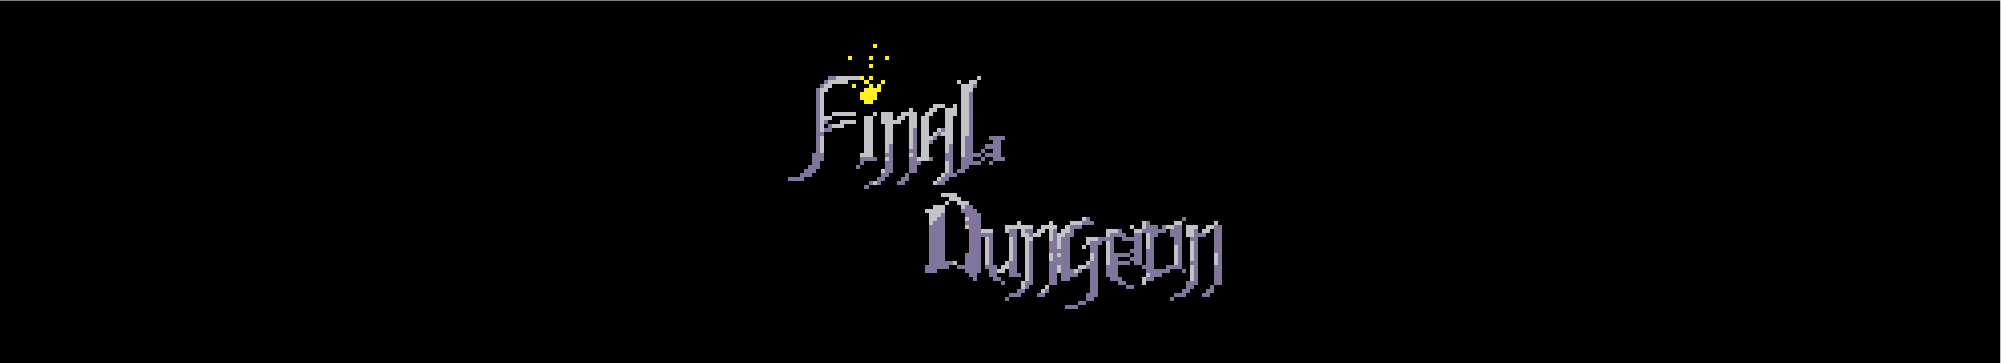 Final Dungeon